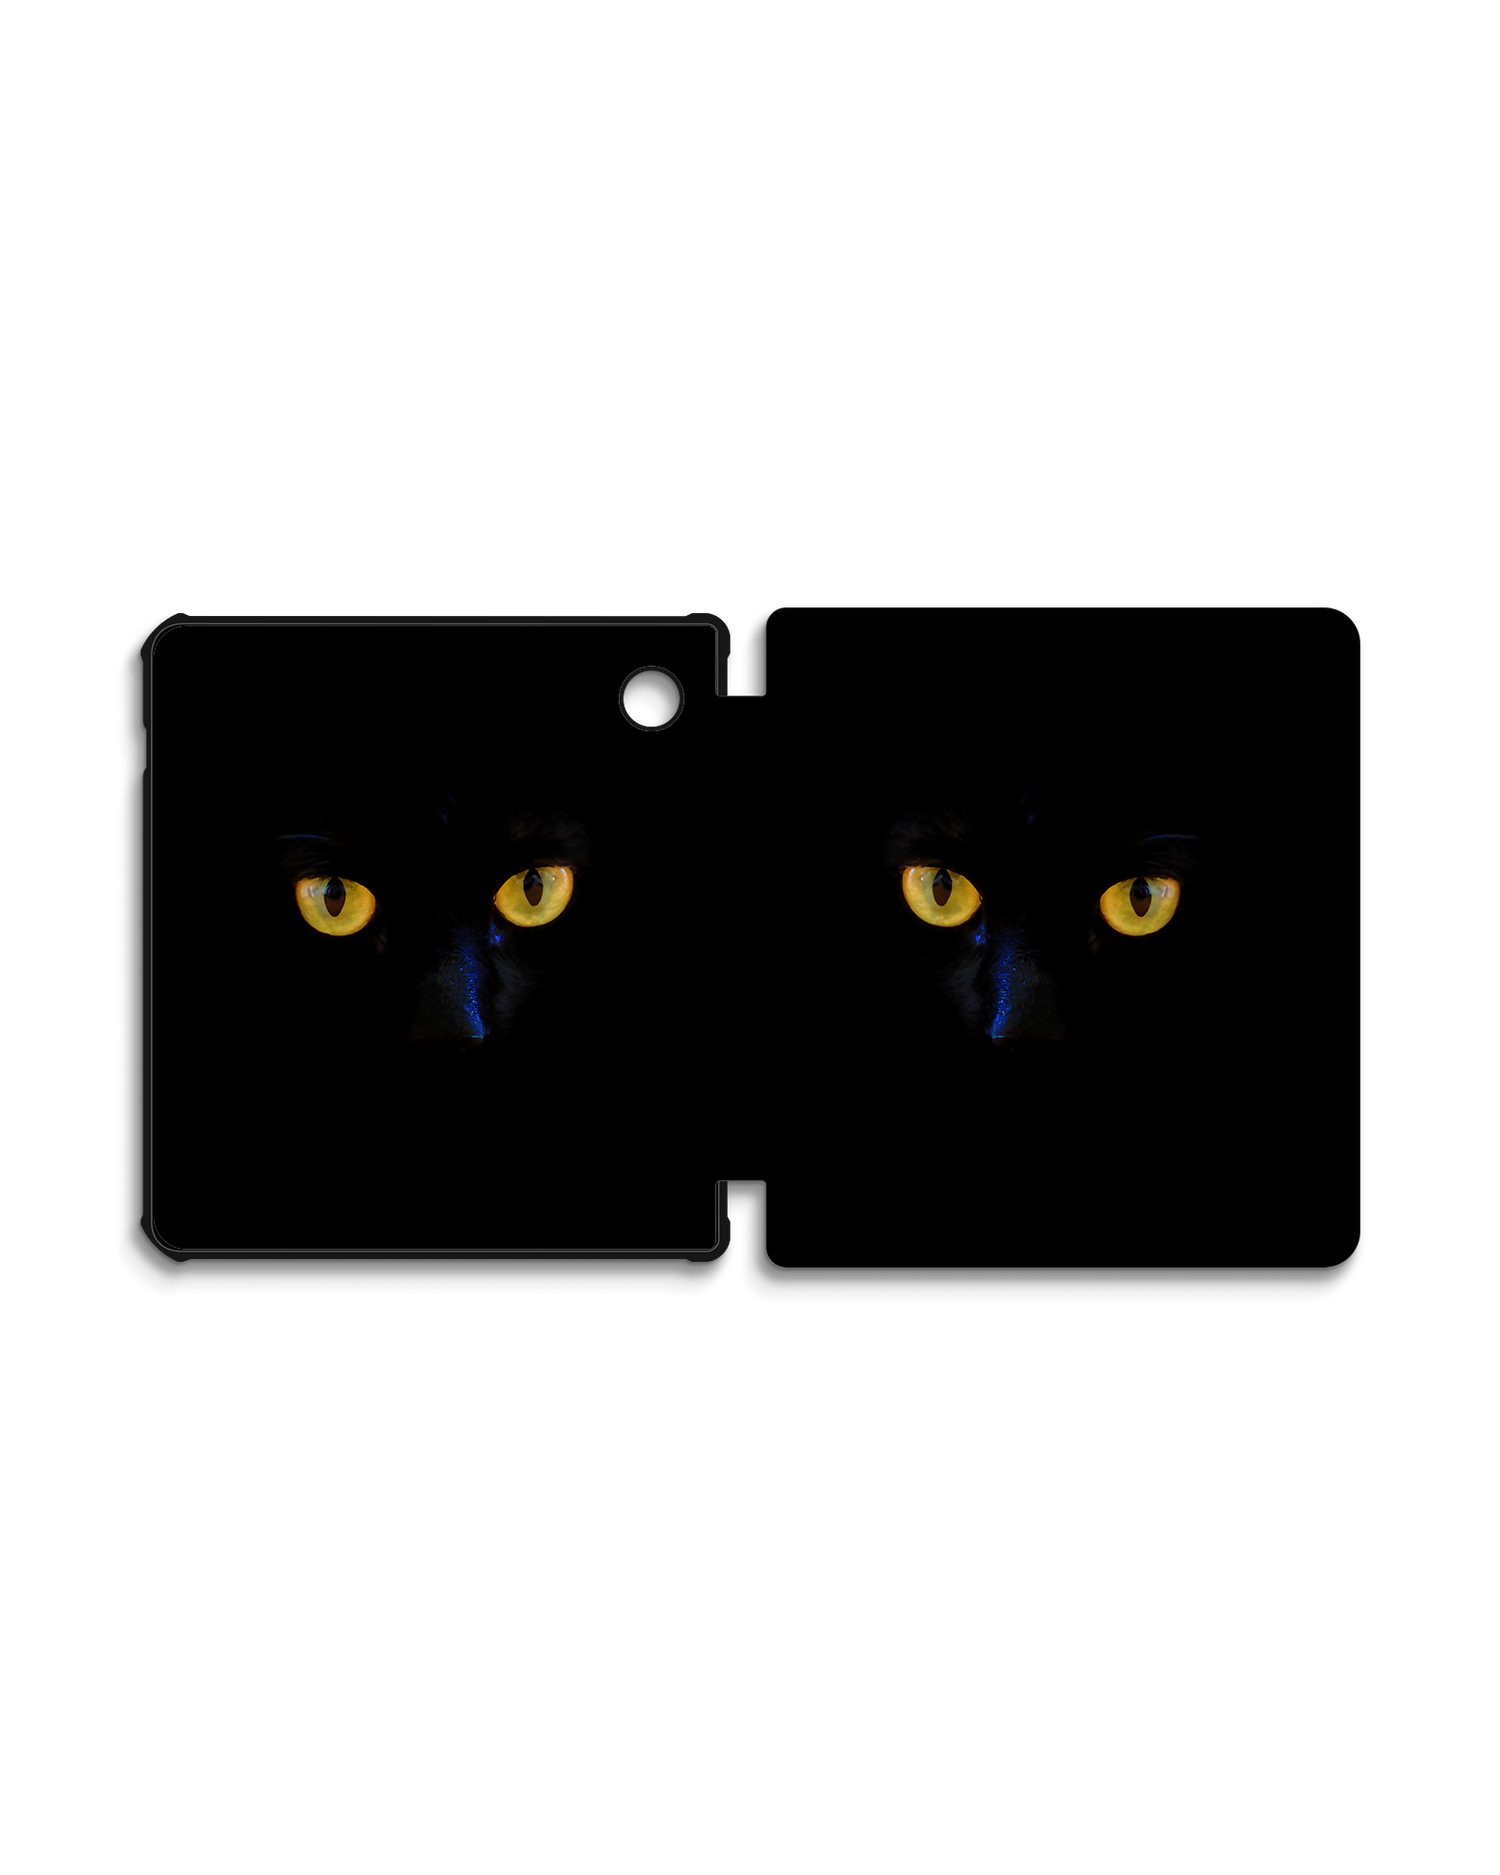 Black Cat eReader Smart Case for tolino vision 5 (2019): Opened exterior view